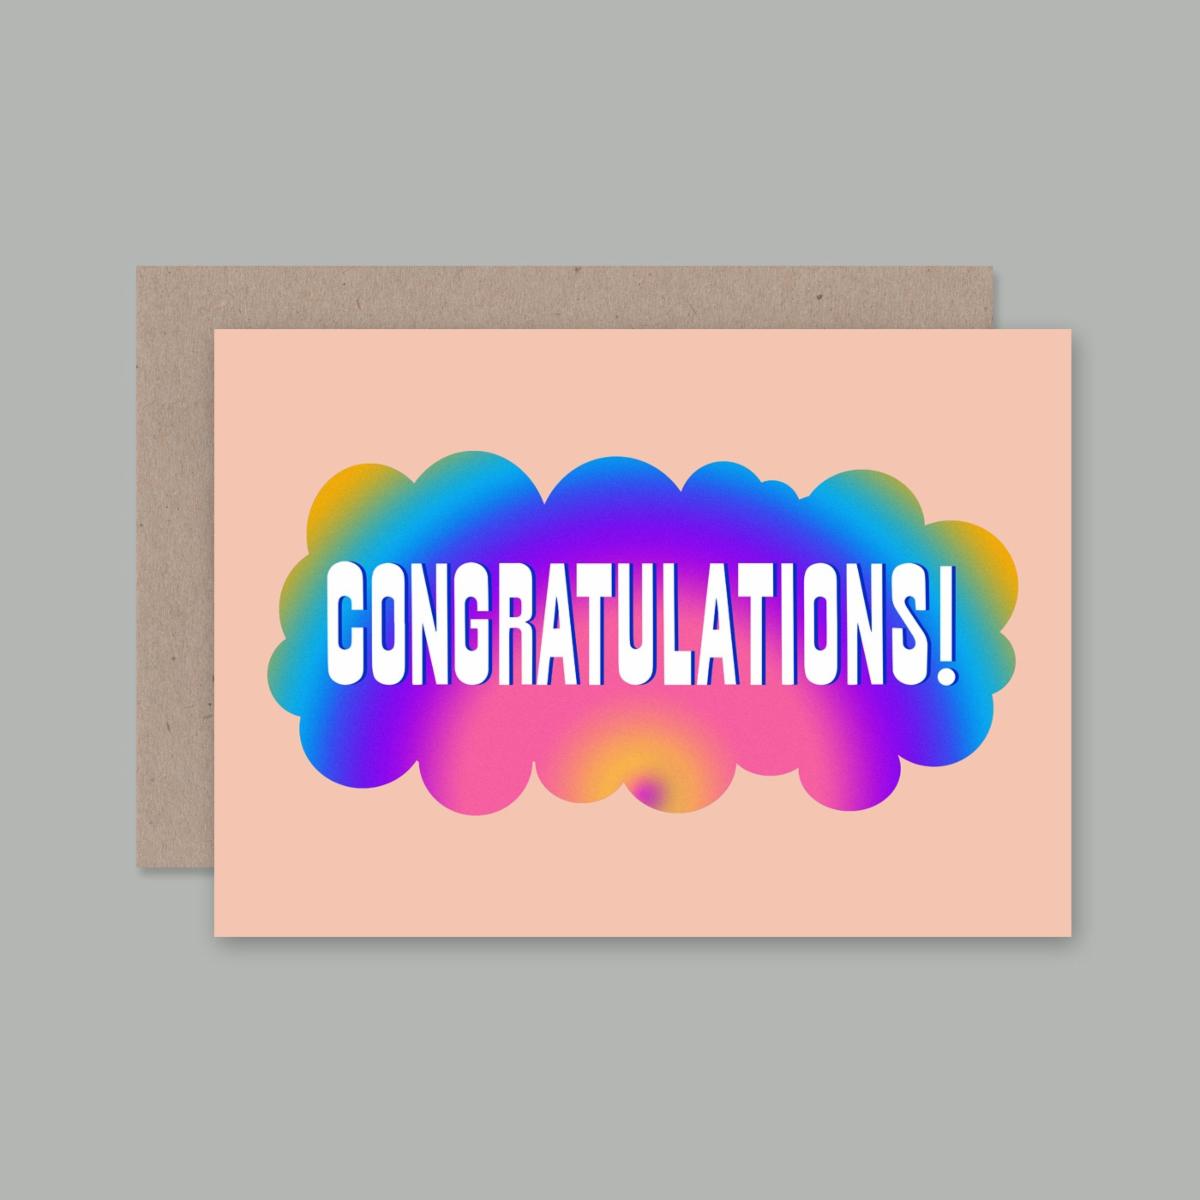 AHD - "Rainbow Congratulations" Greeting Card